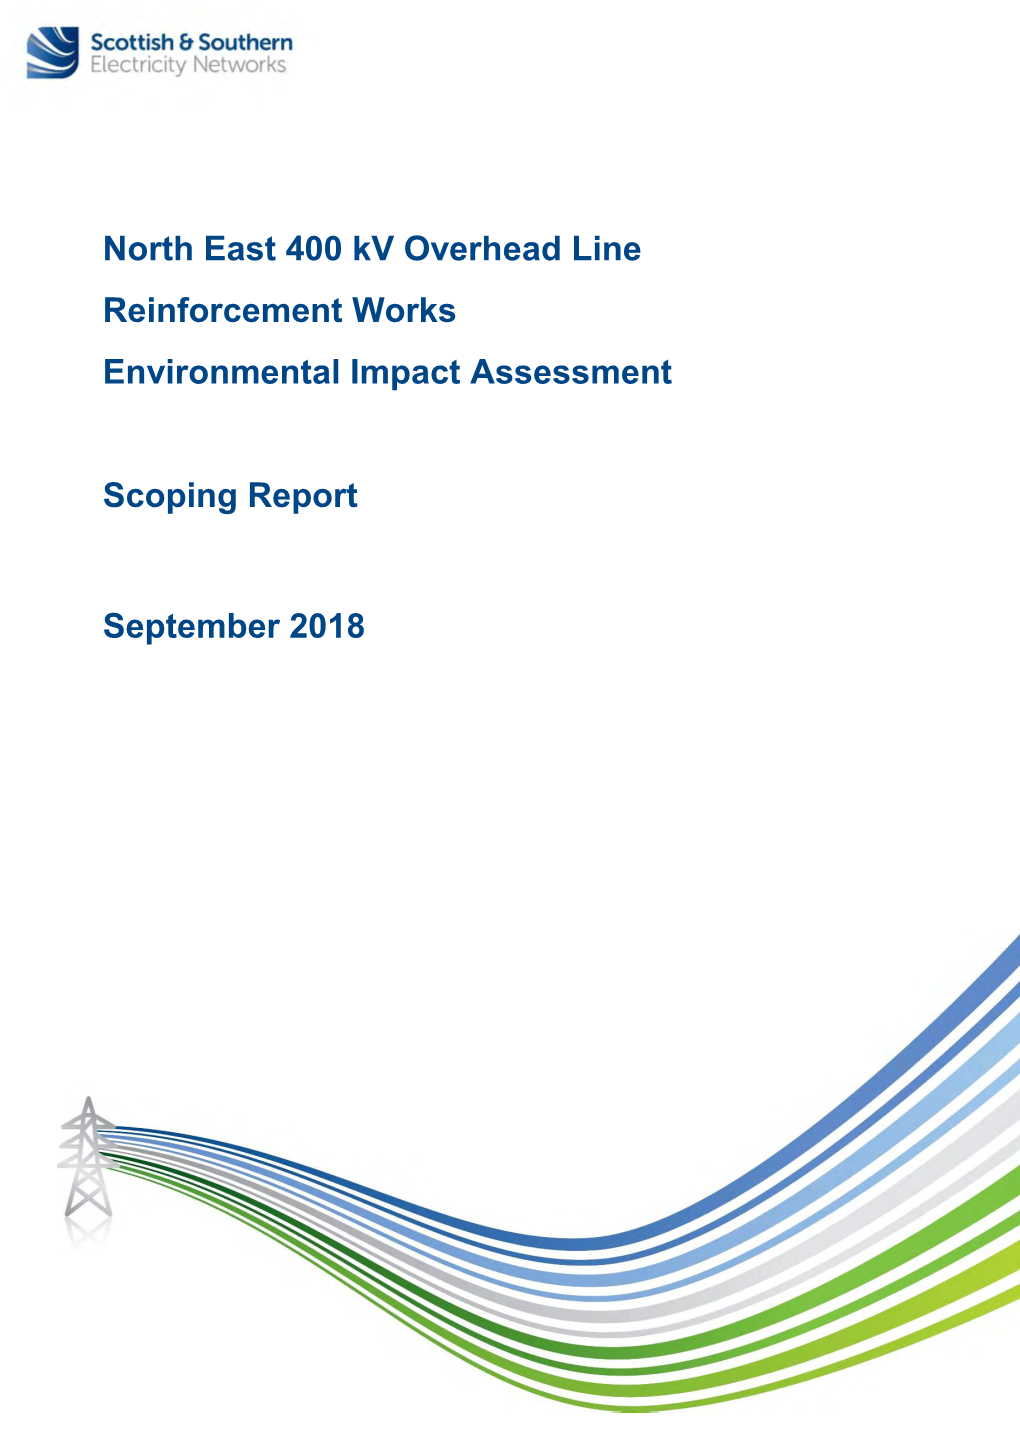 North East 400 Kv Overhead Line Reinforcement Works Environmental Impact Assessment